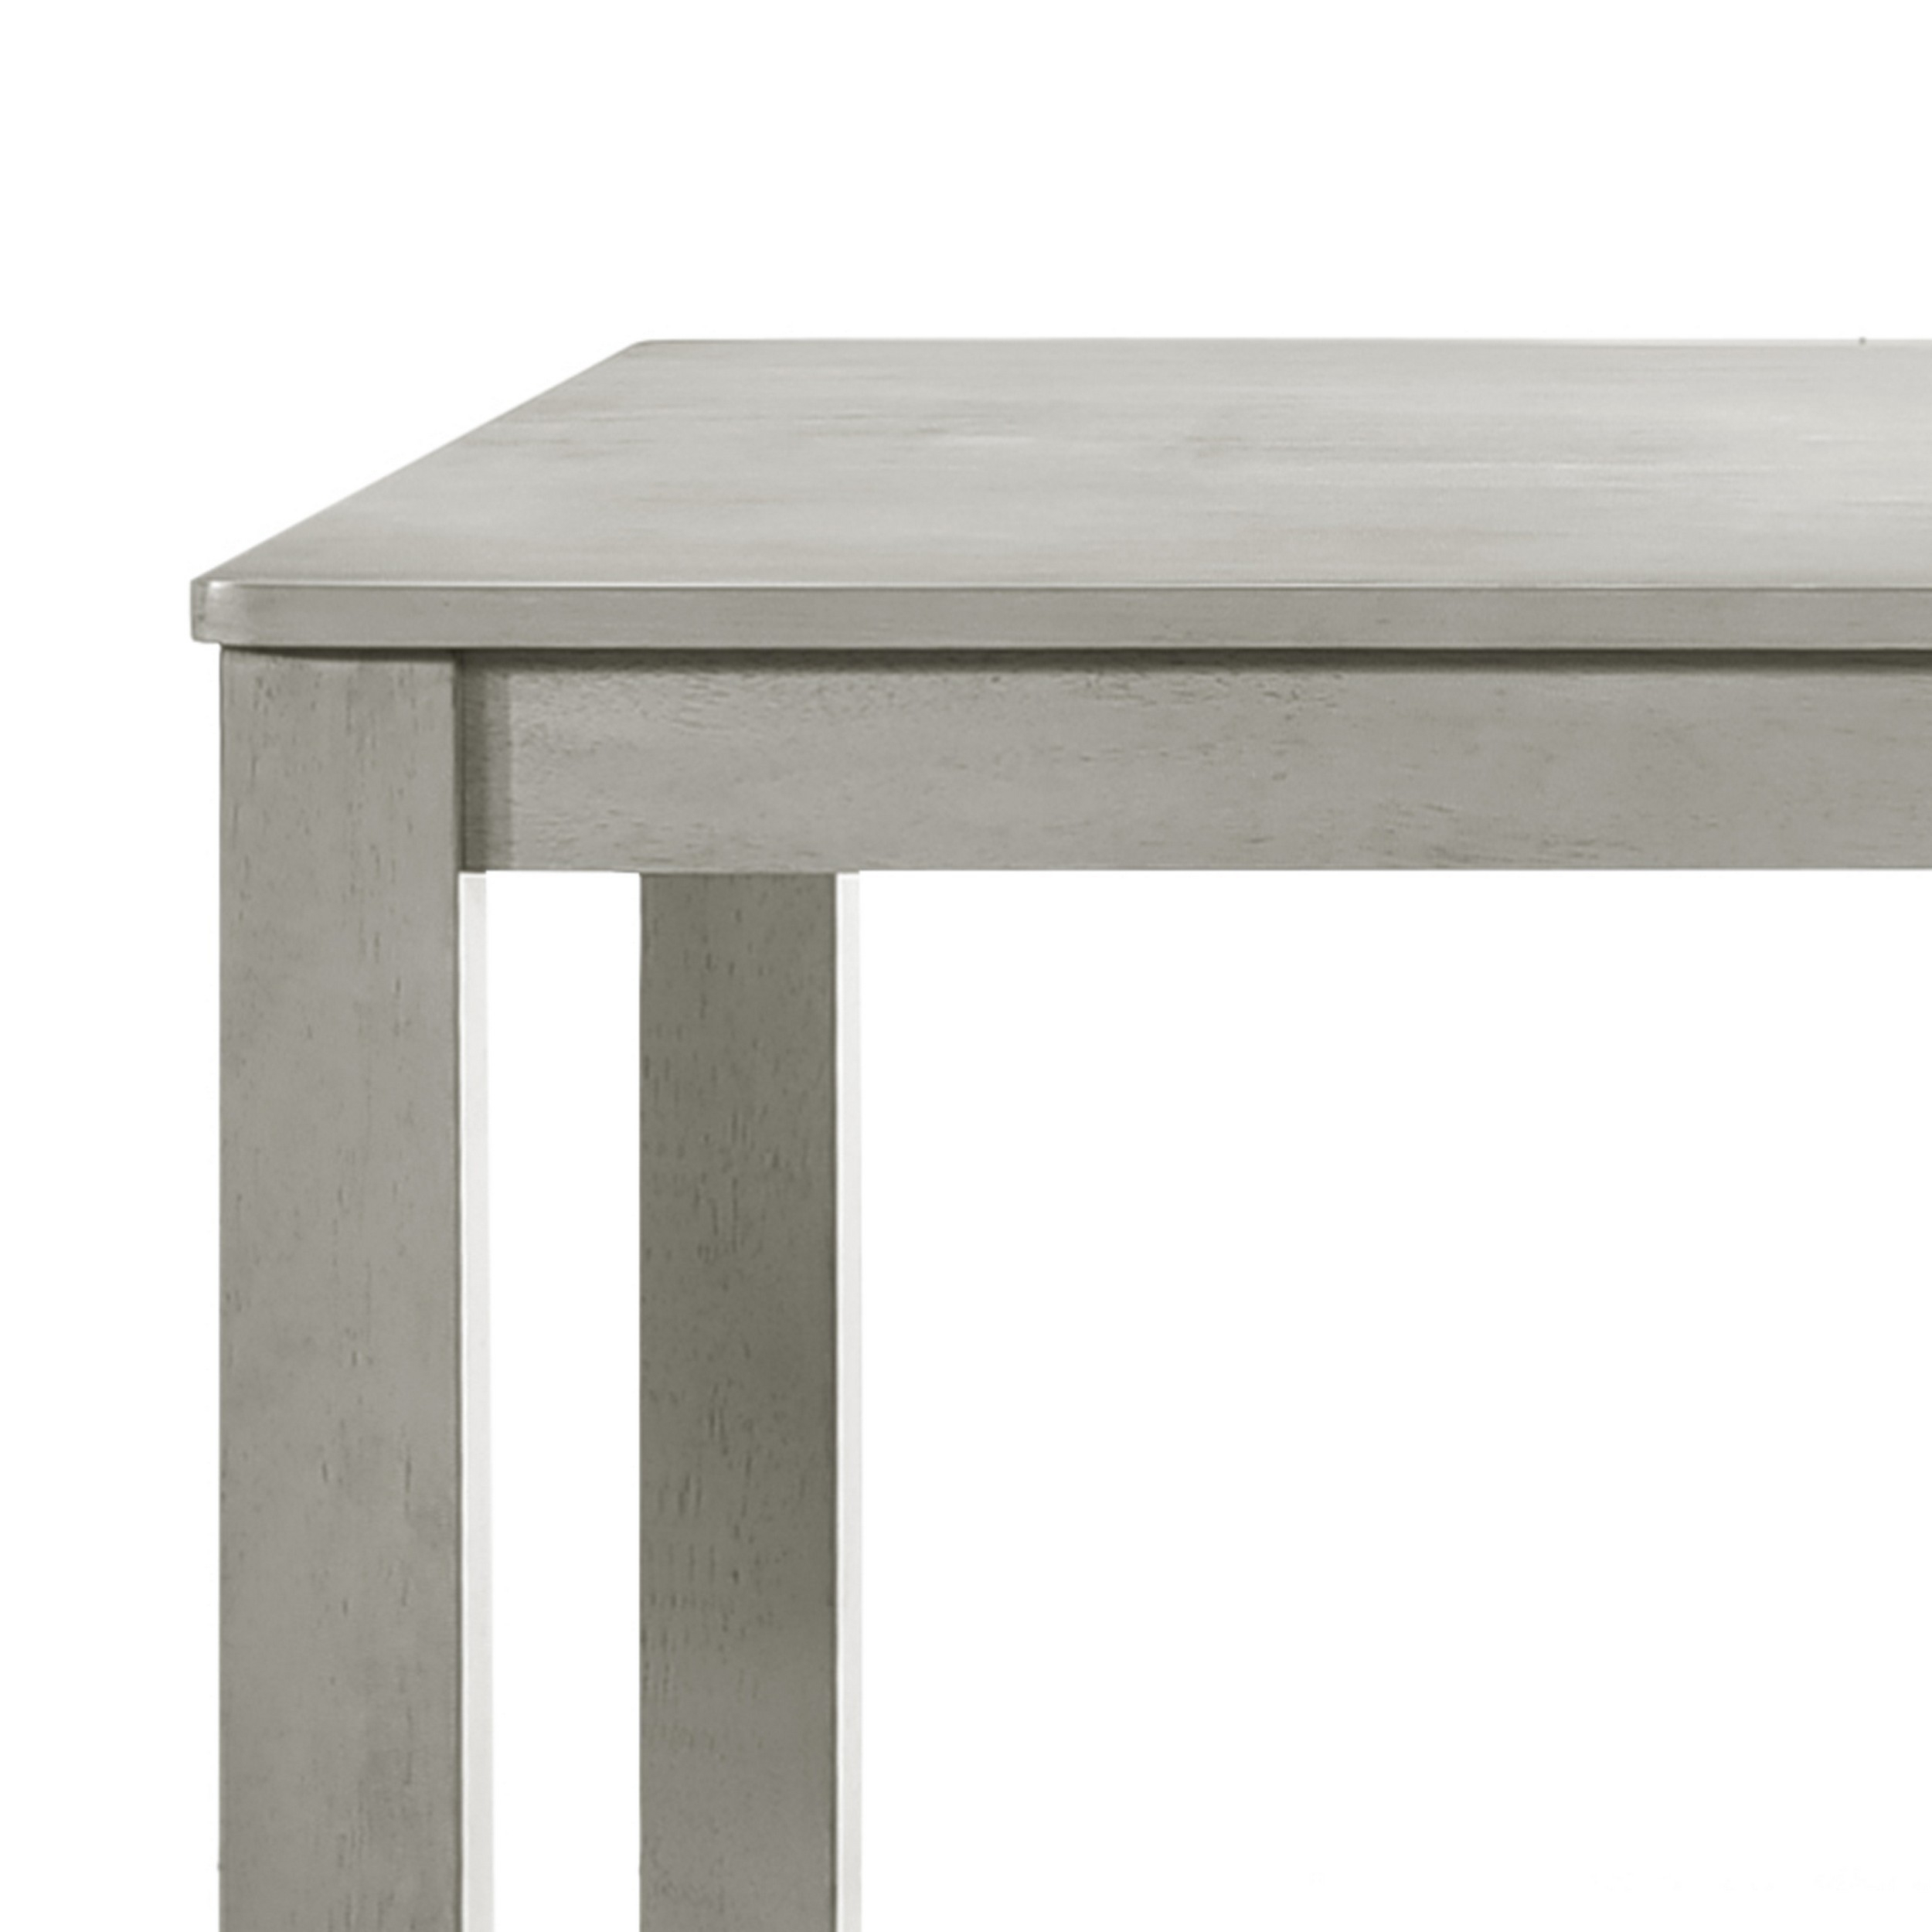 Pane 59 Inch Counter Height Dining Table, Smooth Gray, Tall Block Legs - Saltoro Sherpi